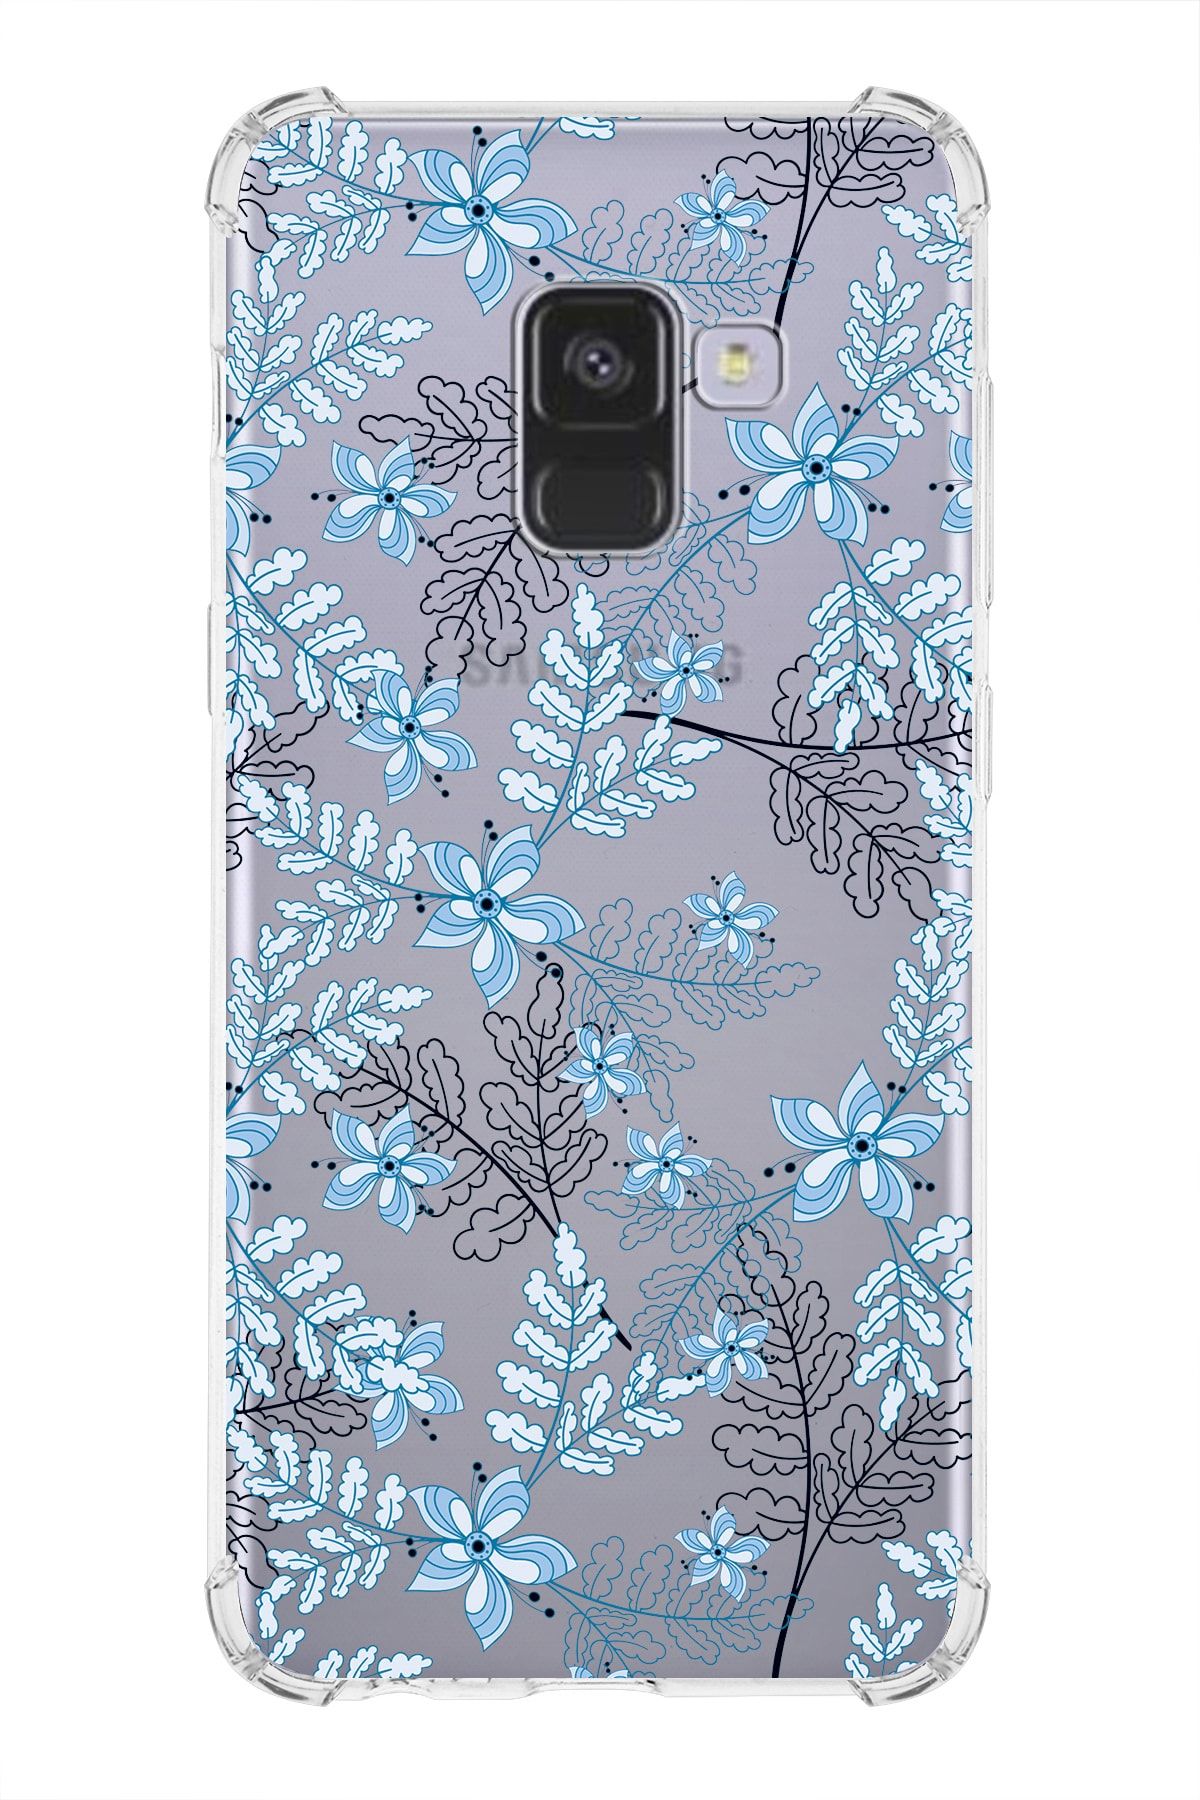 PrintiFy Samsung Galaxy A8 Plus 2018 Uyumlu Köşe Korumalı Antişok Kapak Floral Colors Tasarımlı Şeffaf Kılıf